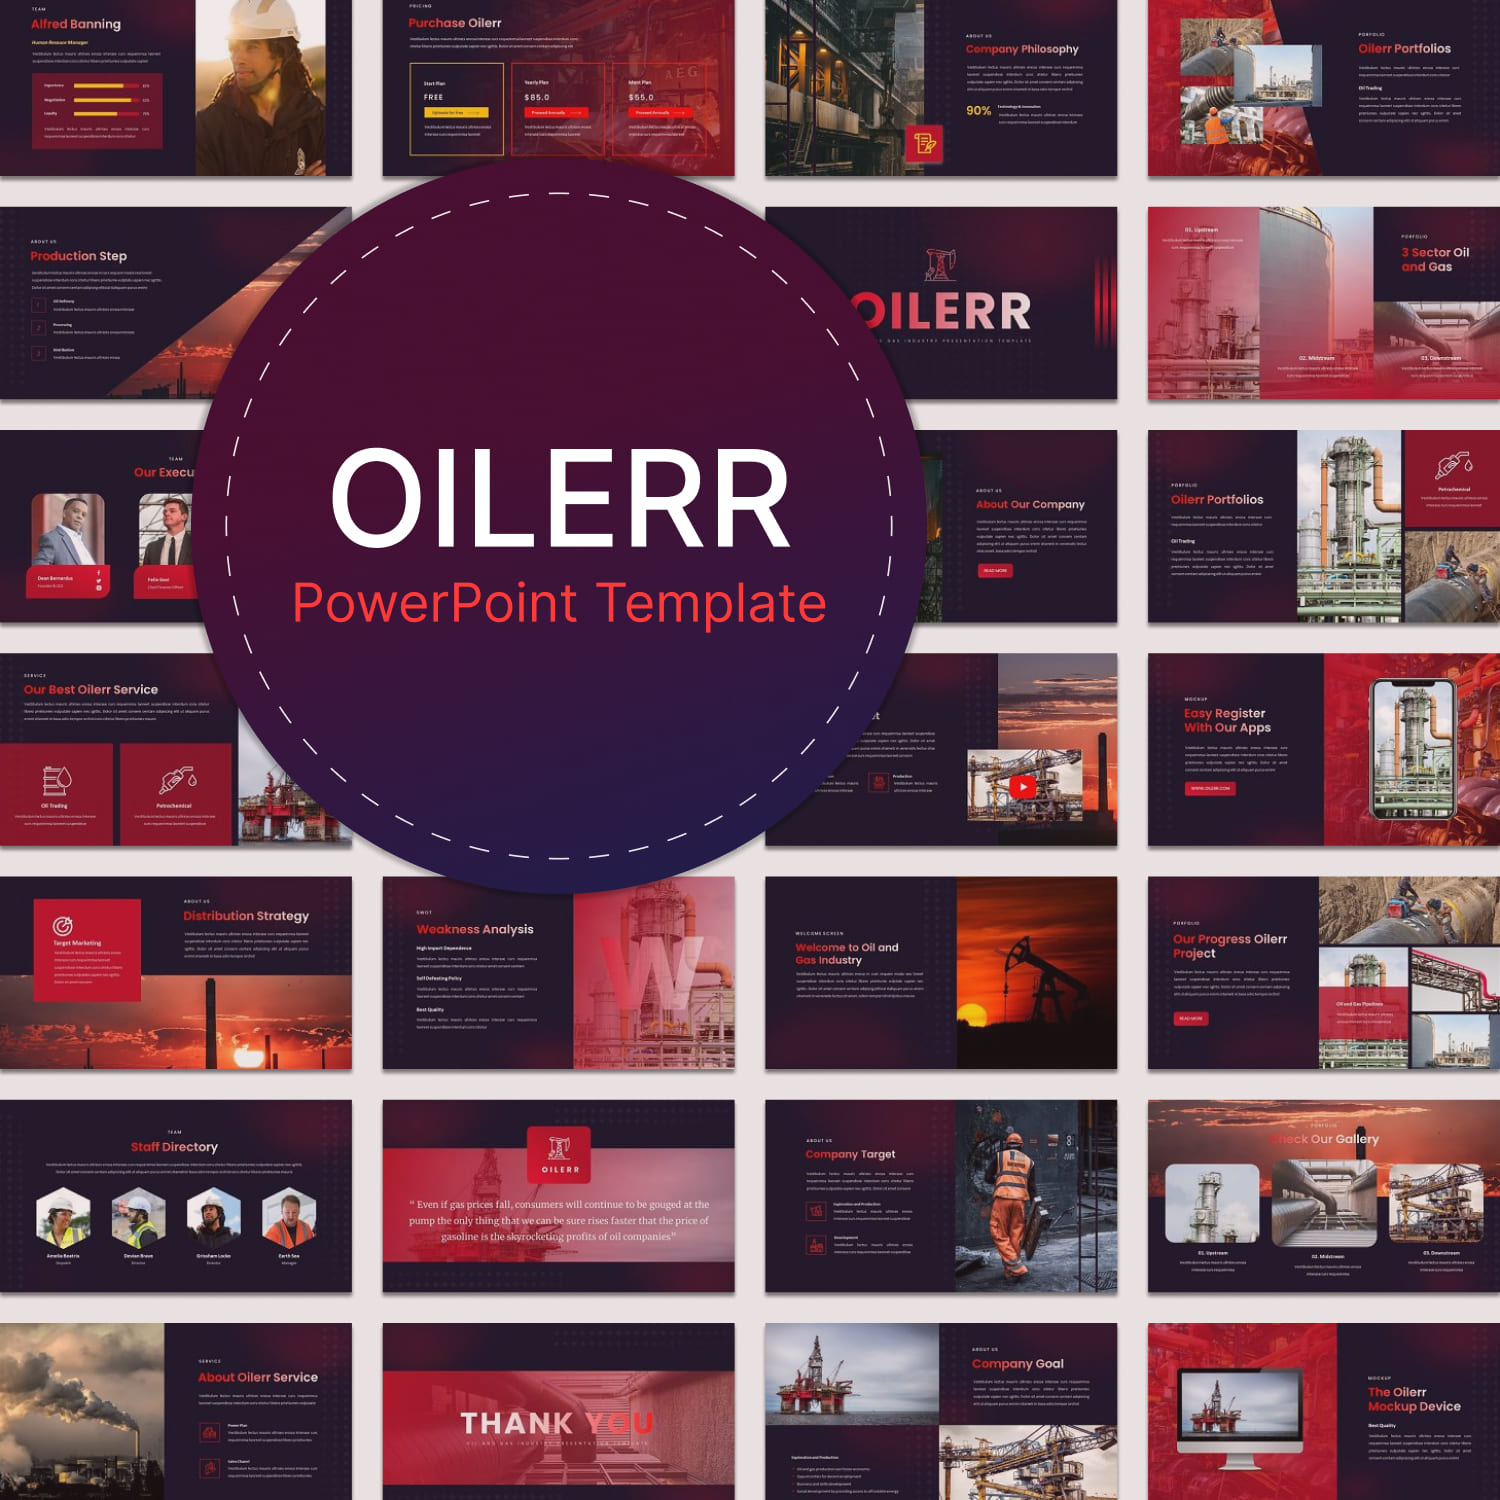 Oilerr - PowerPoint Template.